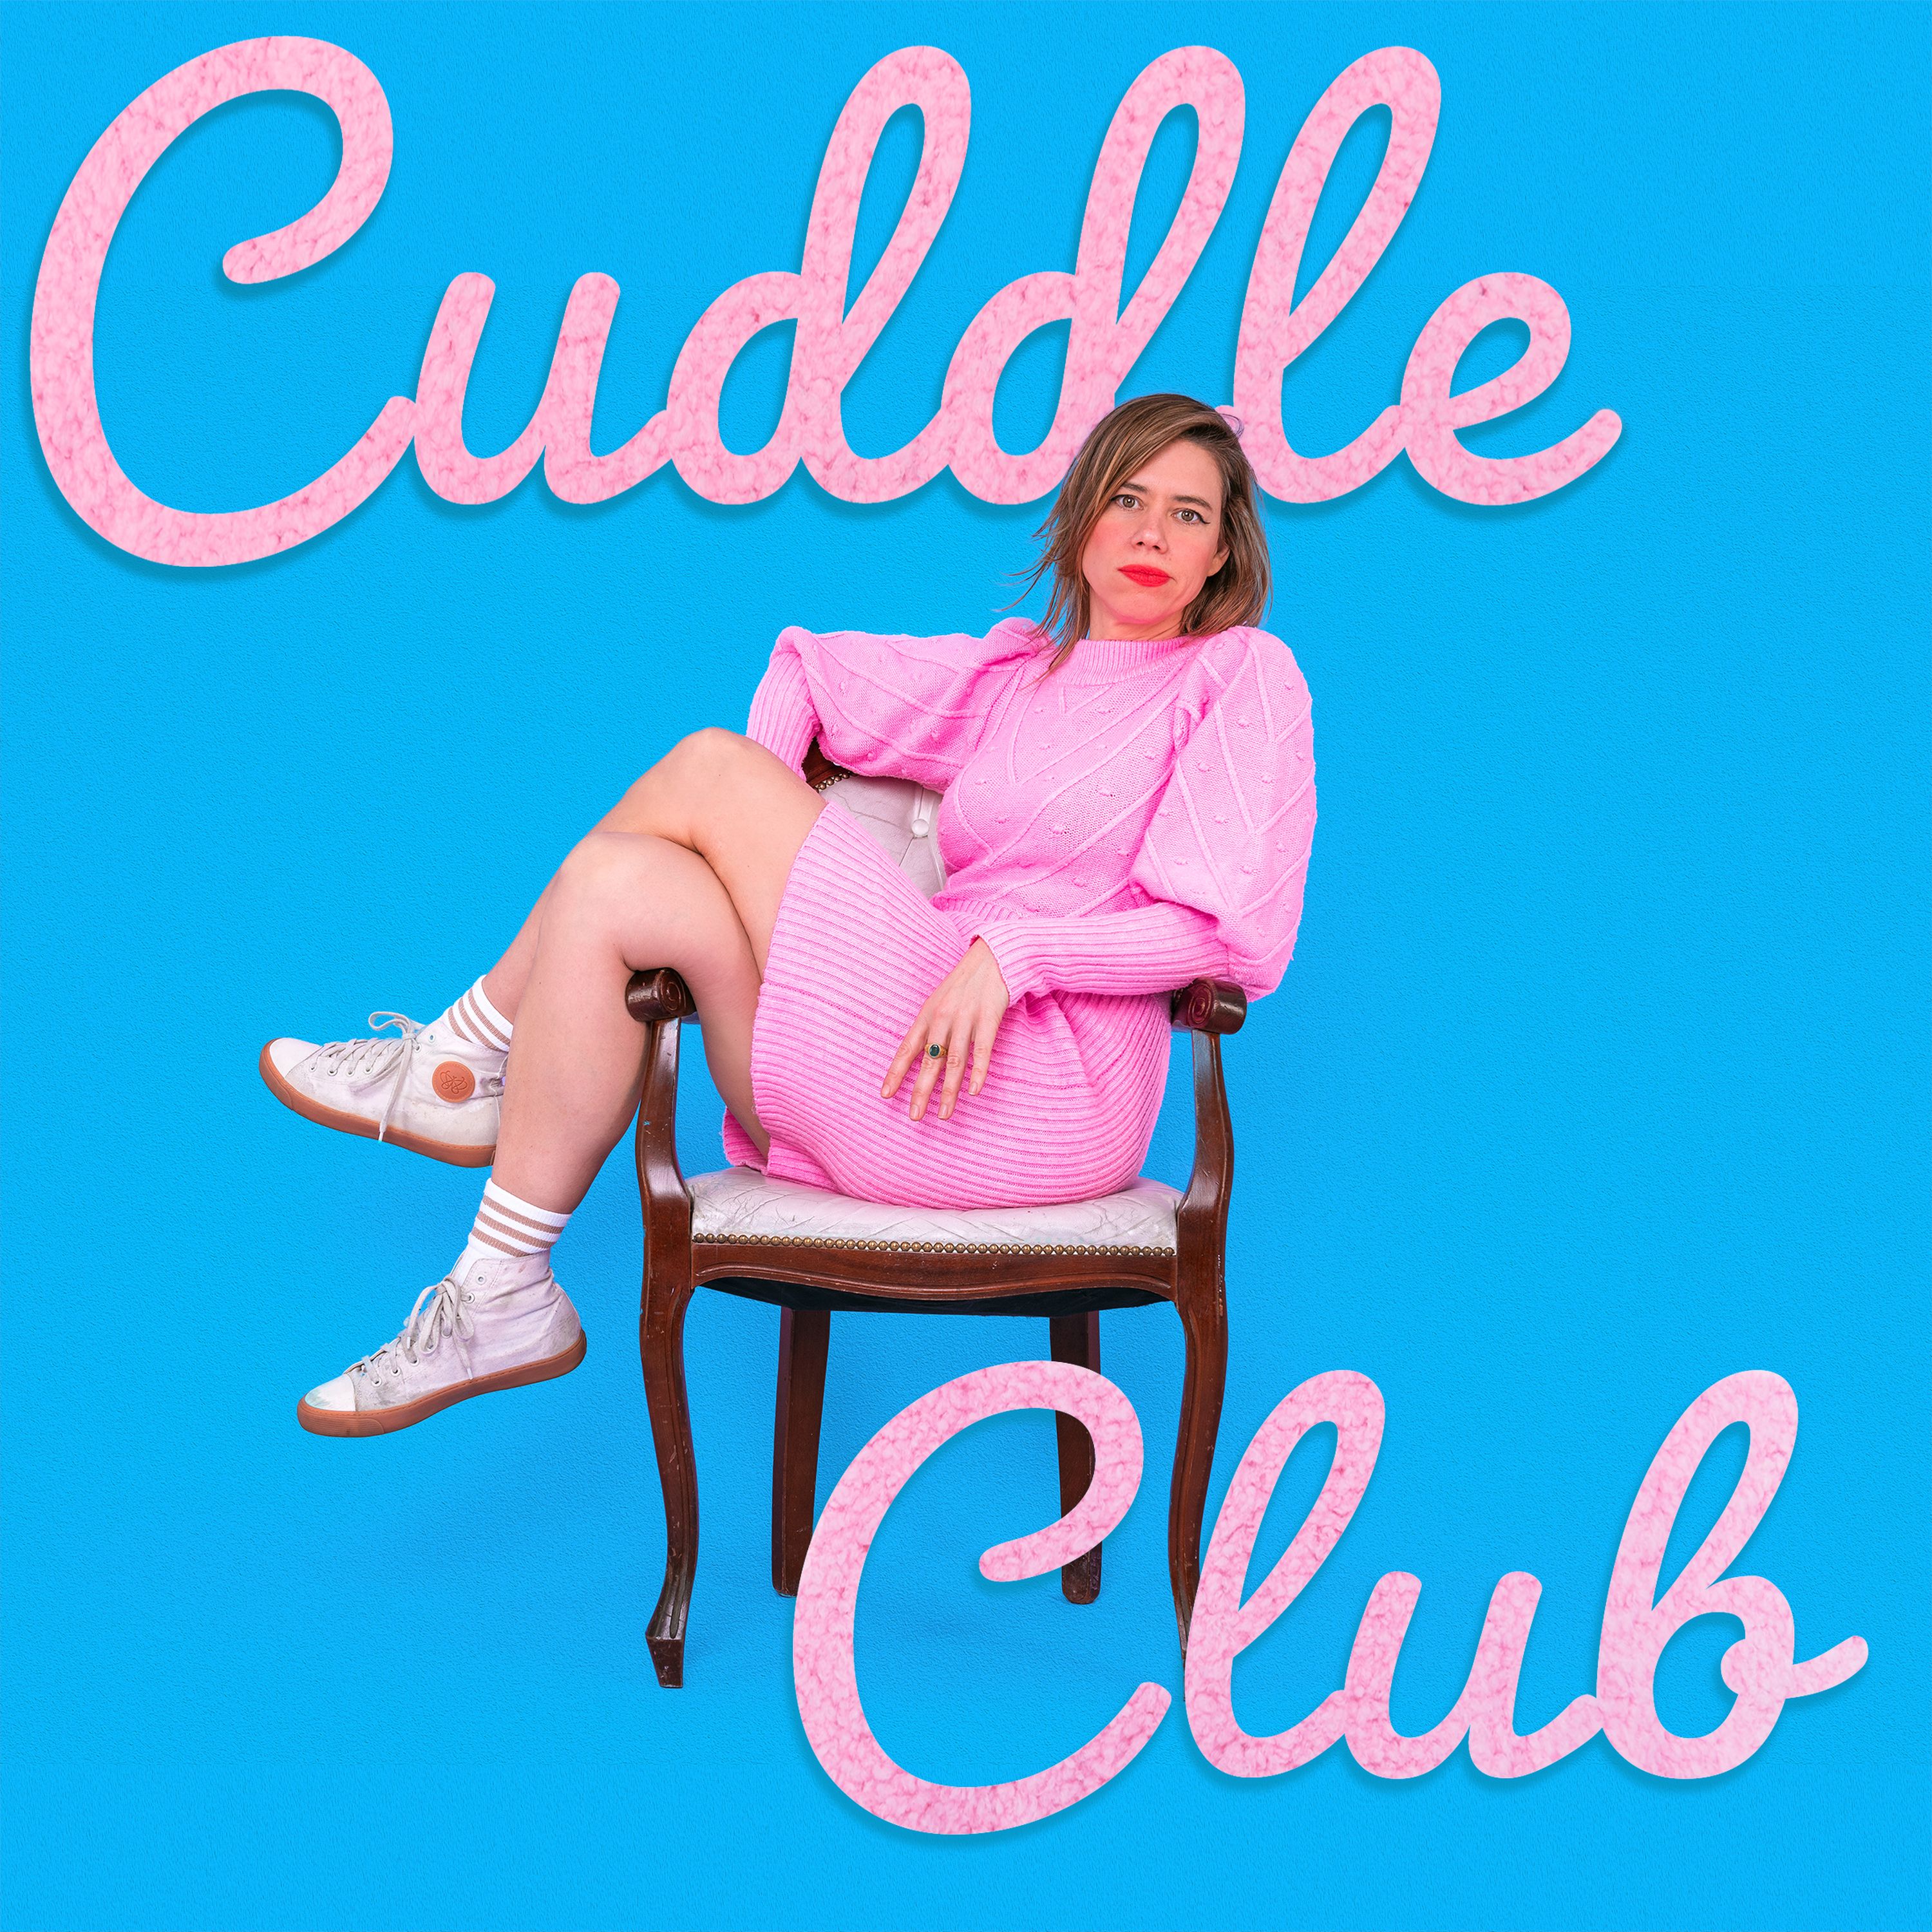 Cuddle Club - Series 3 - Trailer